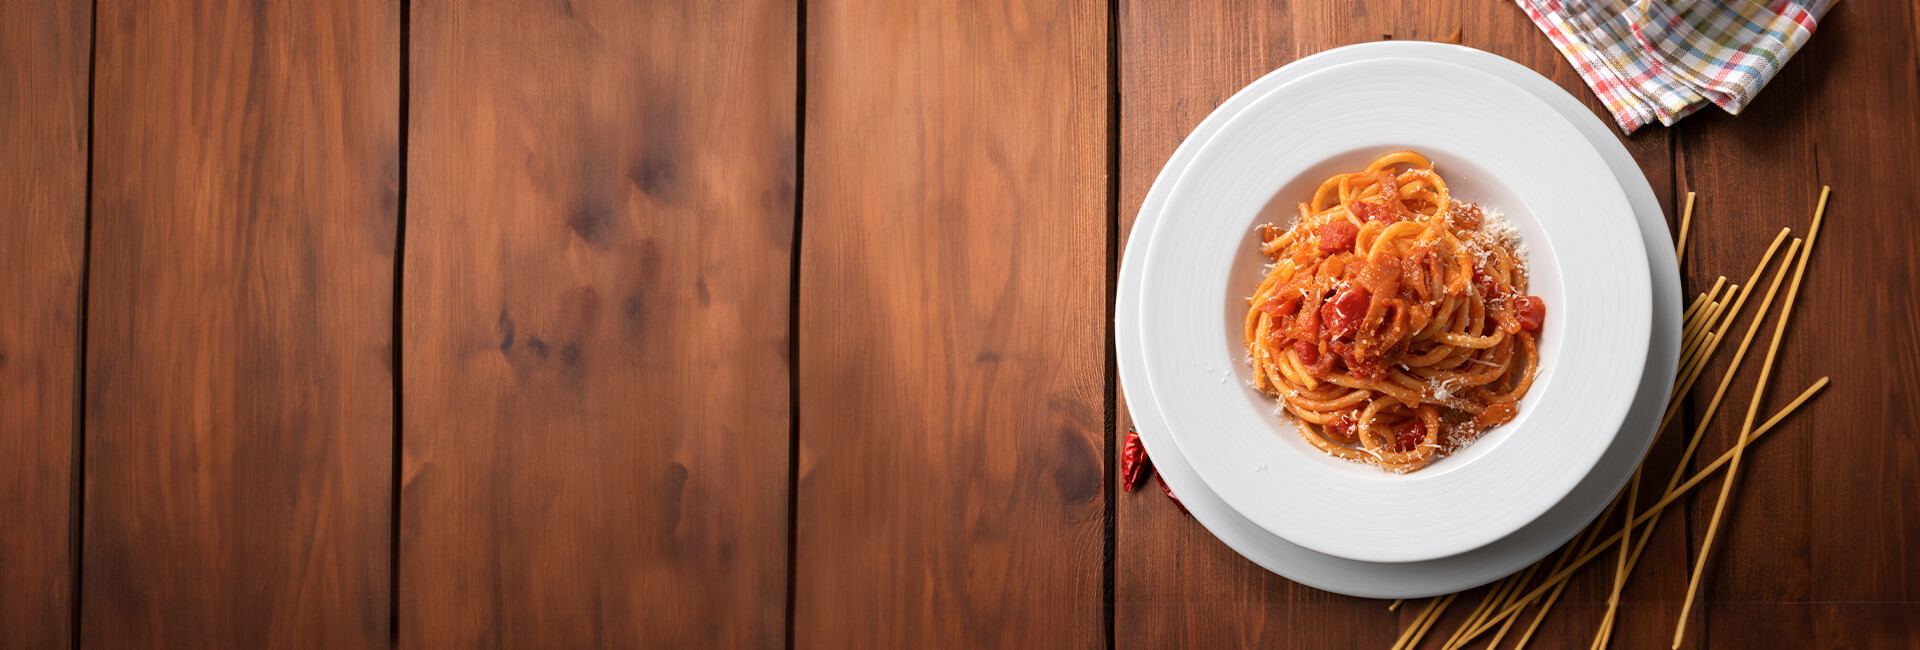 Sagra degli spaghetti all’amatriciana